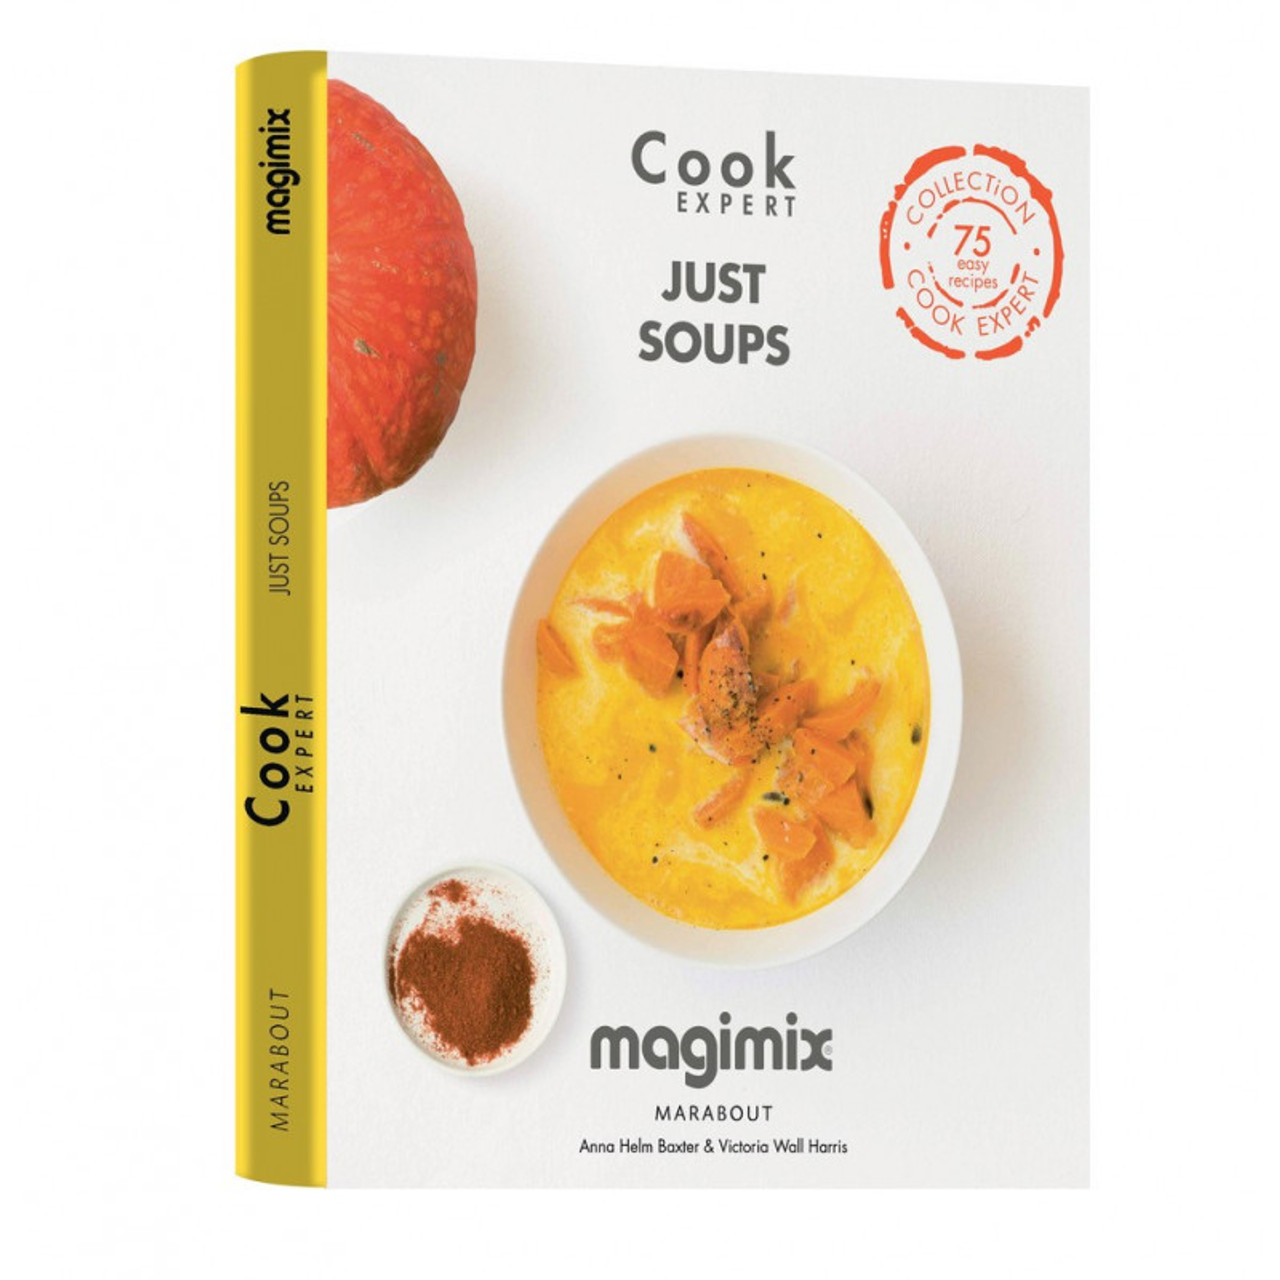 461167 - Magimix Cook Expert Just Soups Recipe Book